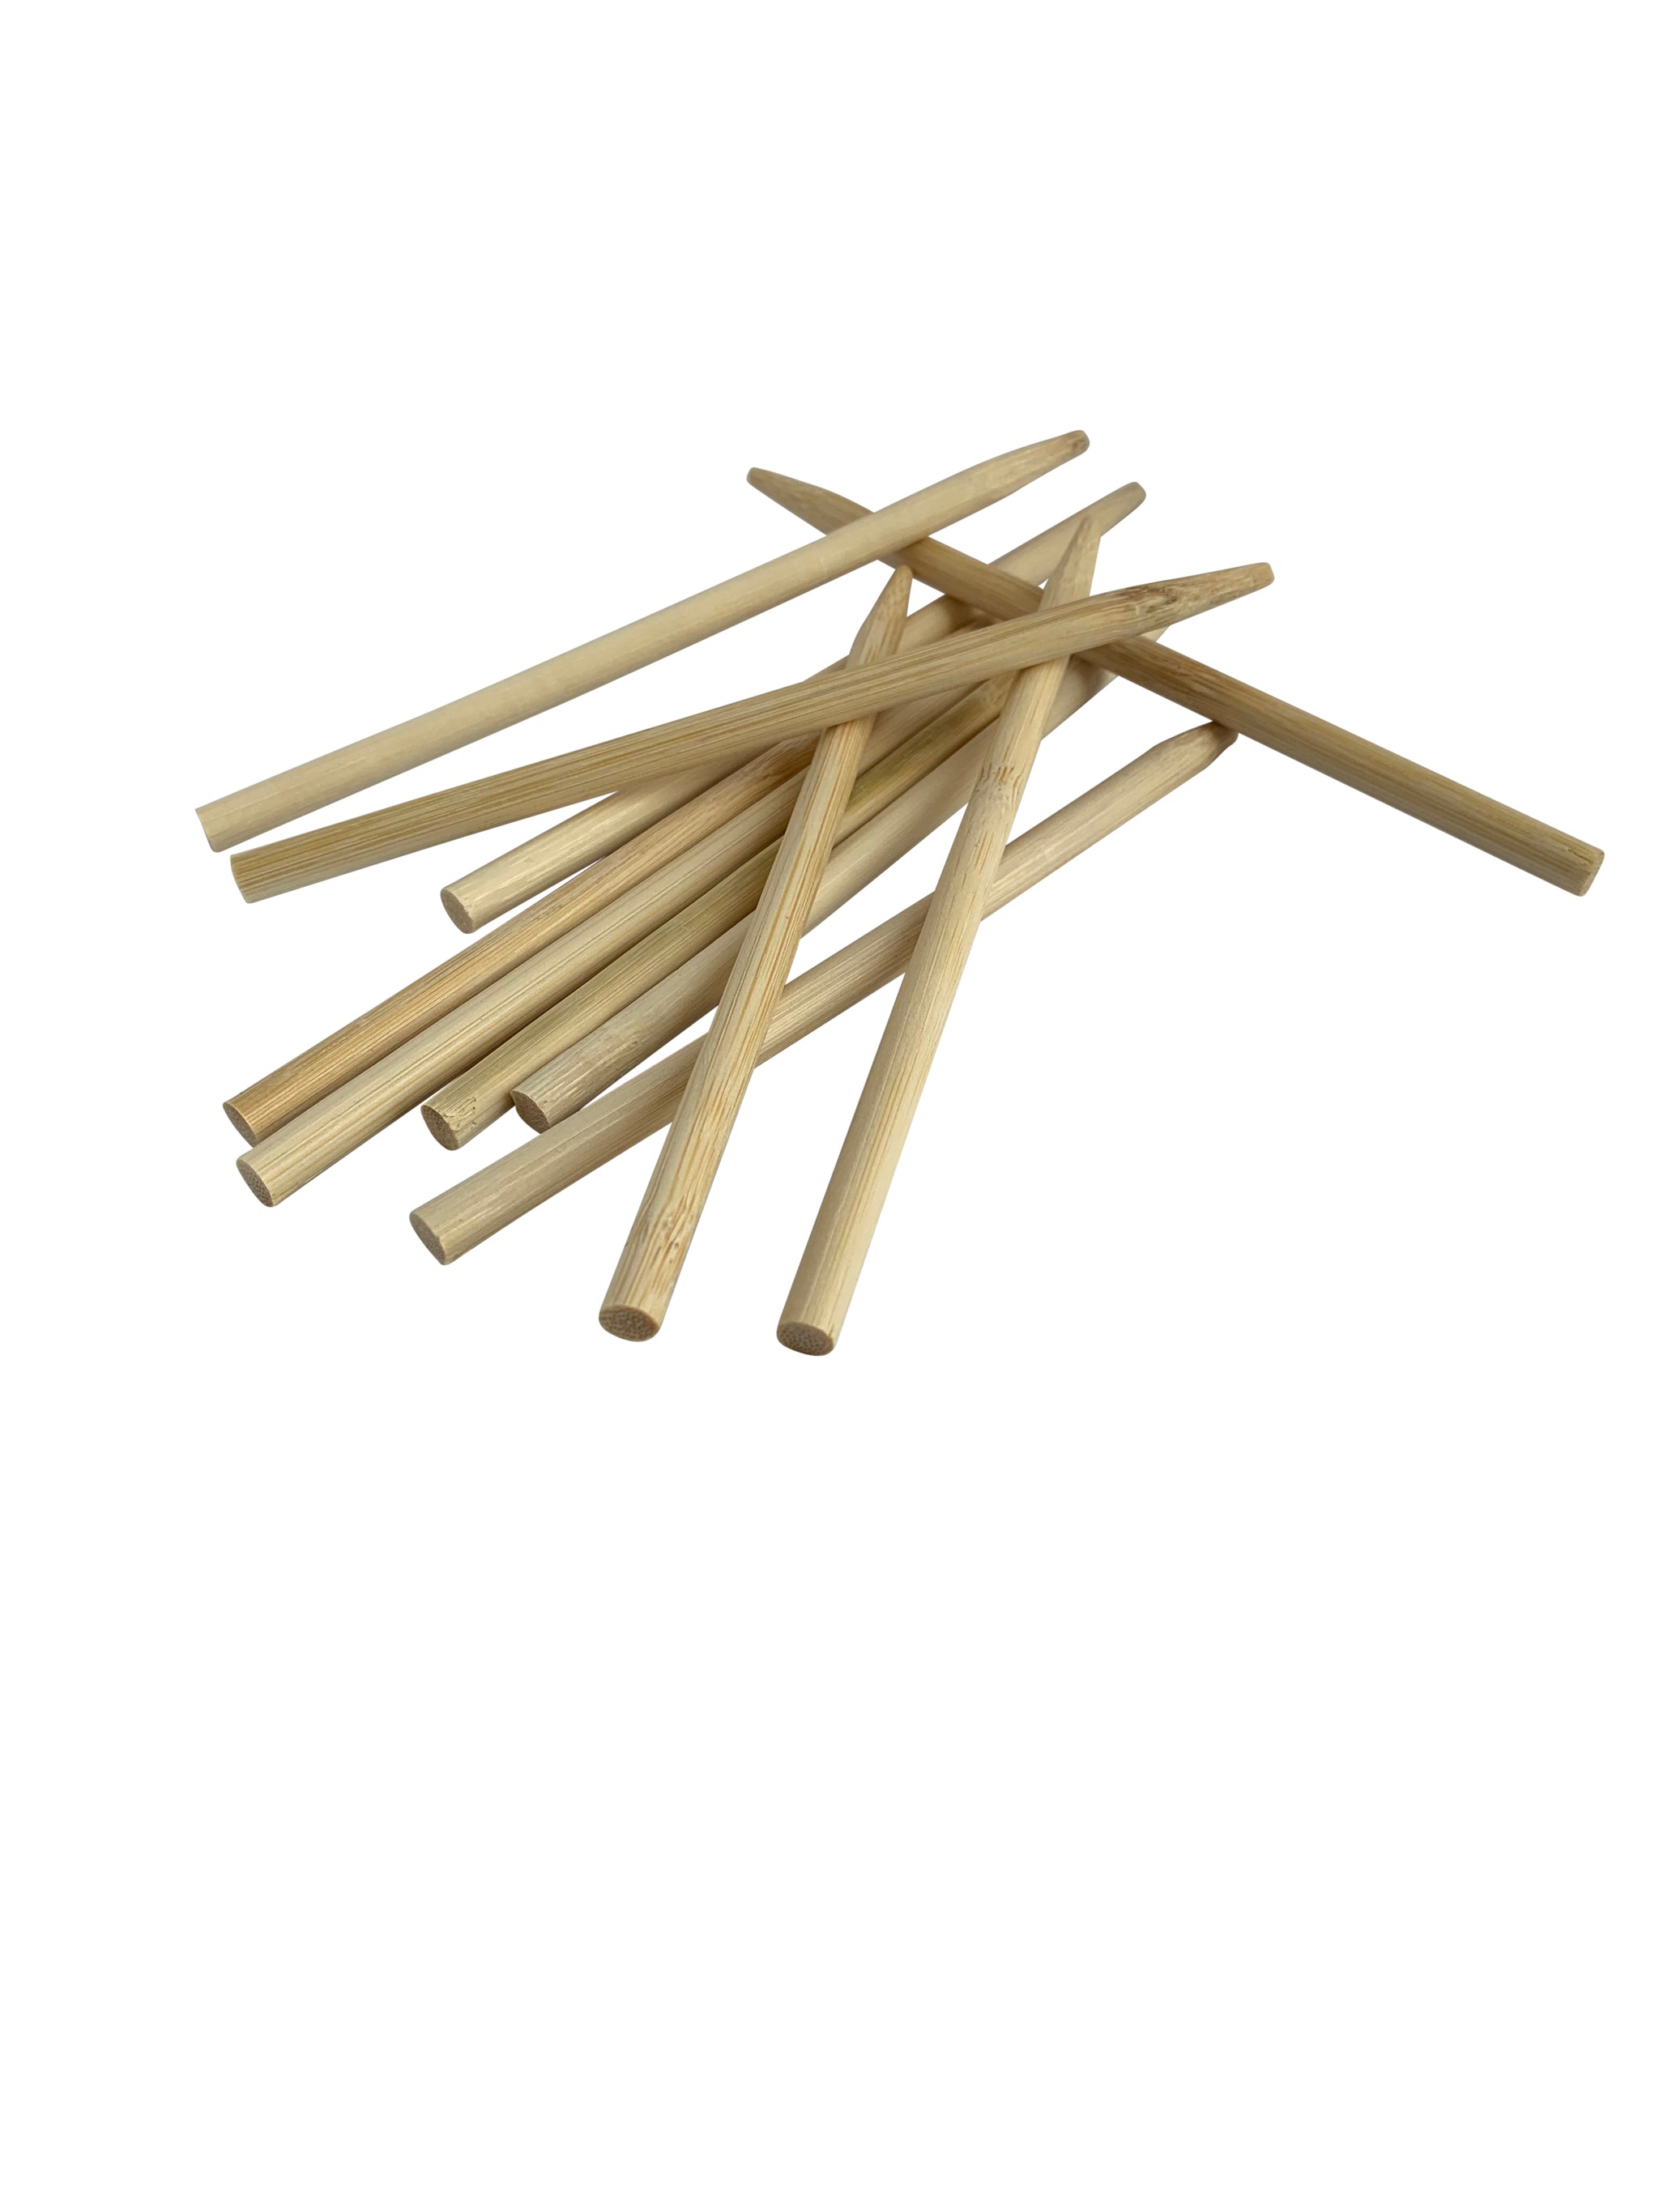 KingSeal Bamboo Grilling Skewers - 10 Inch Length, Bulk Pack